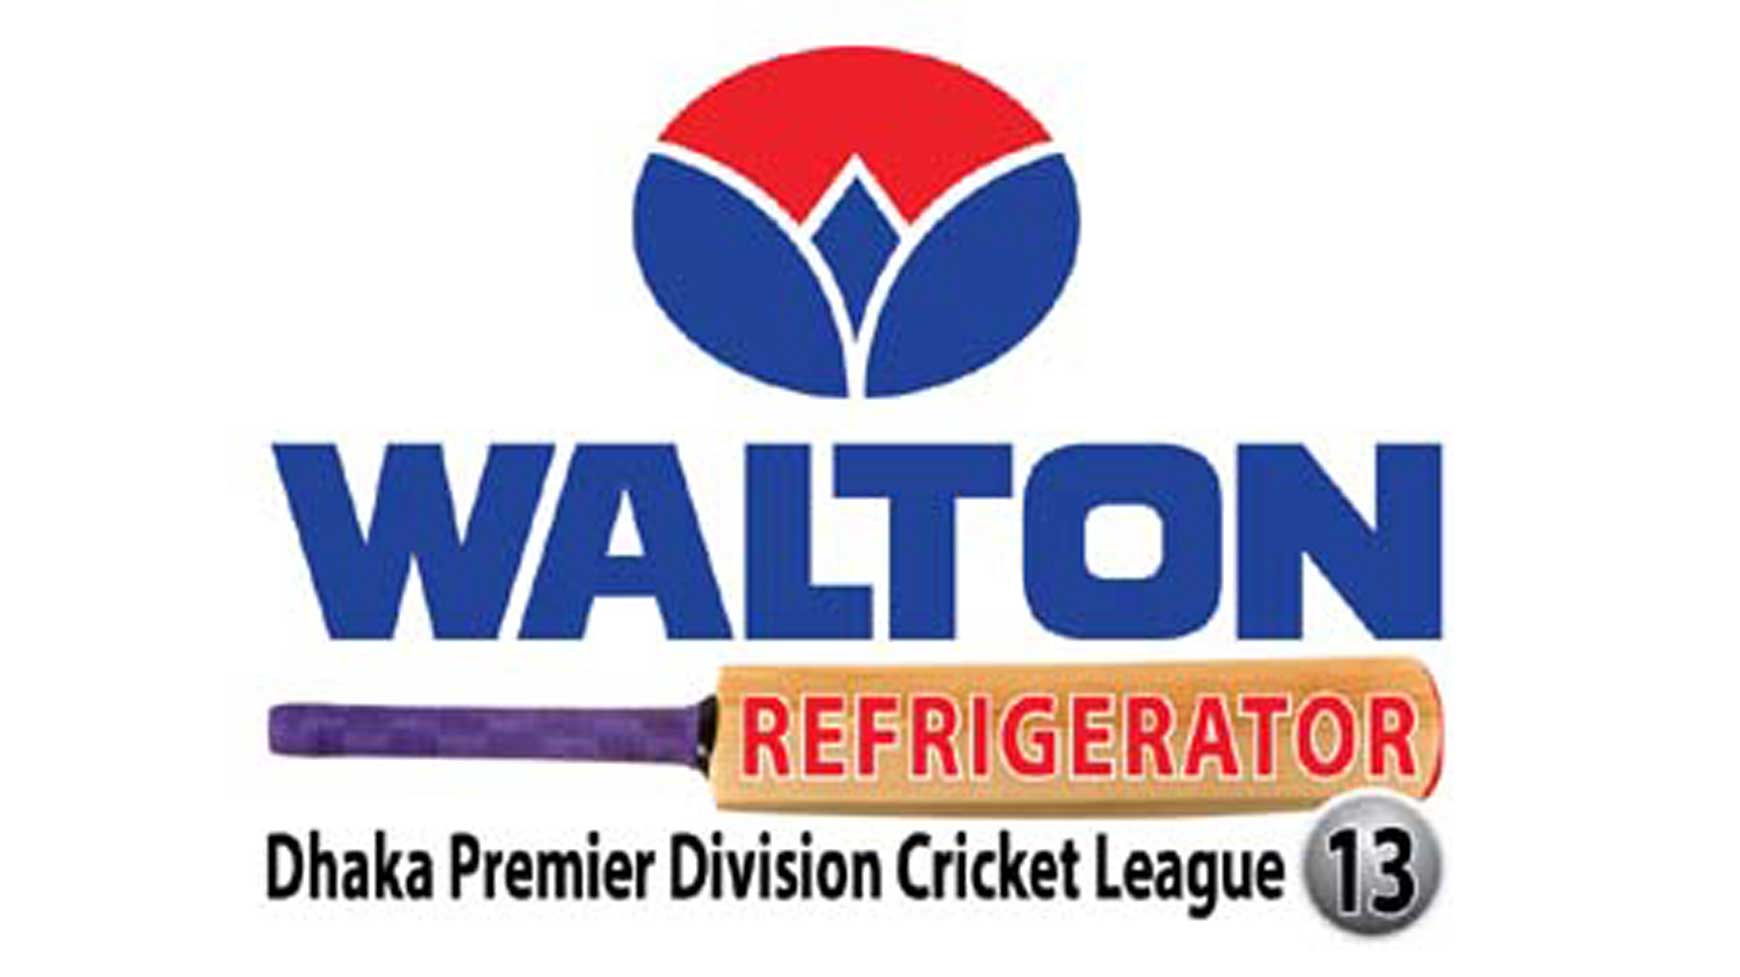 walton logo 02